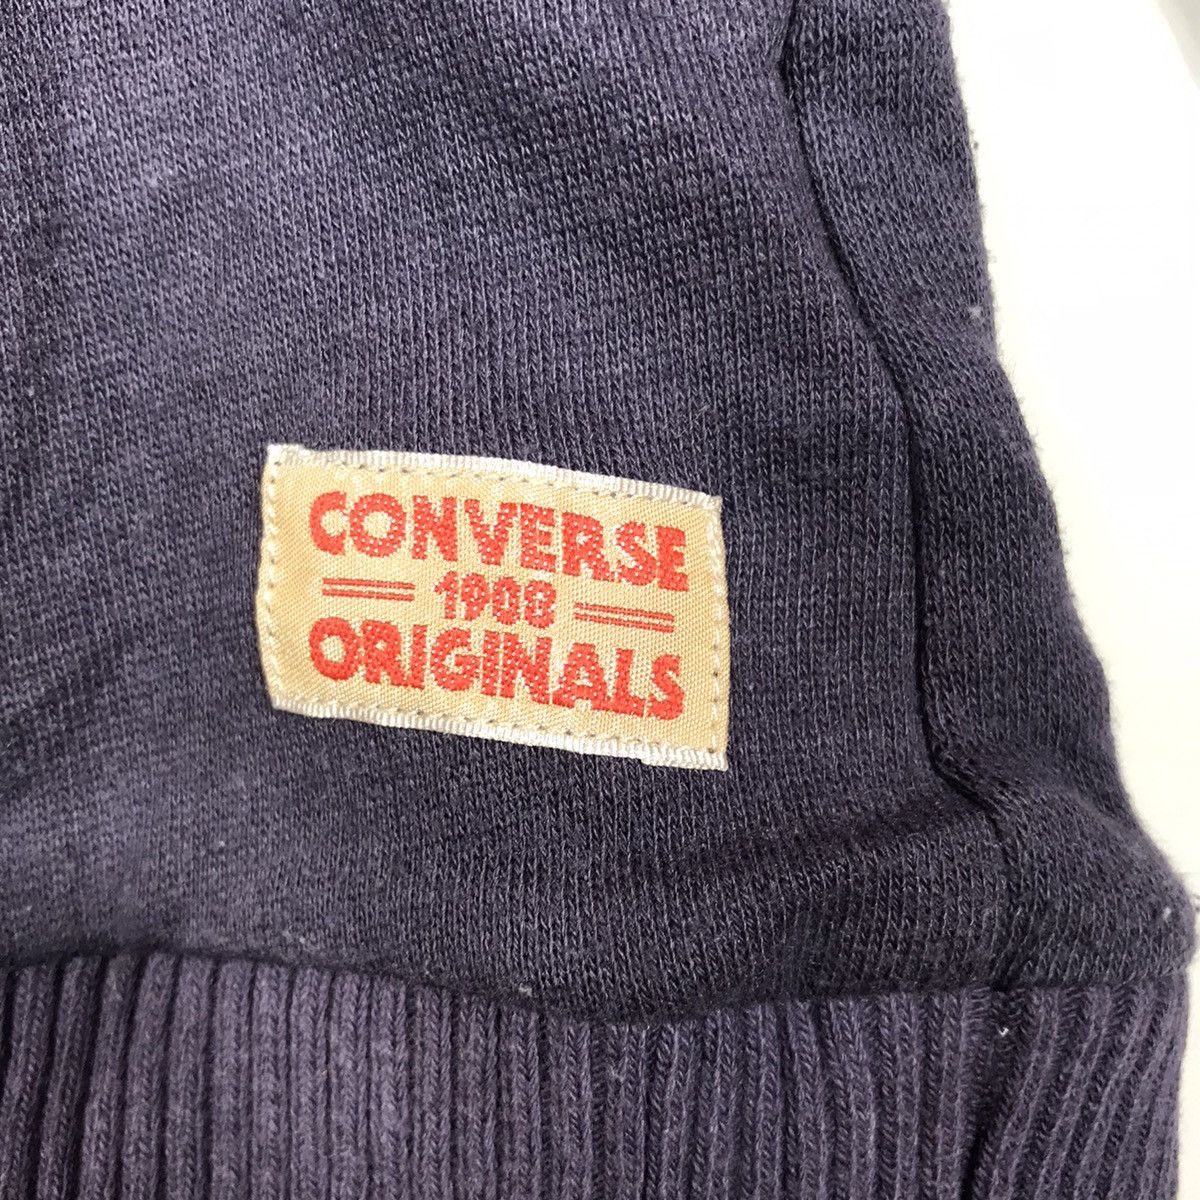 Converse Converse Sweatshirt Size US M / EU 48-50 / 2 - 3 Preview